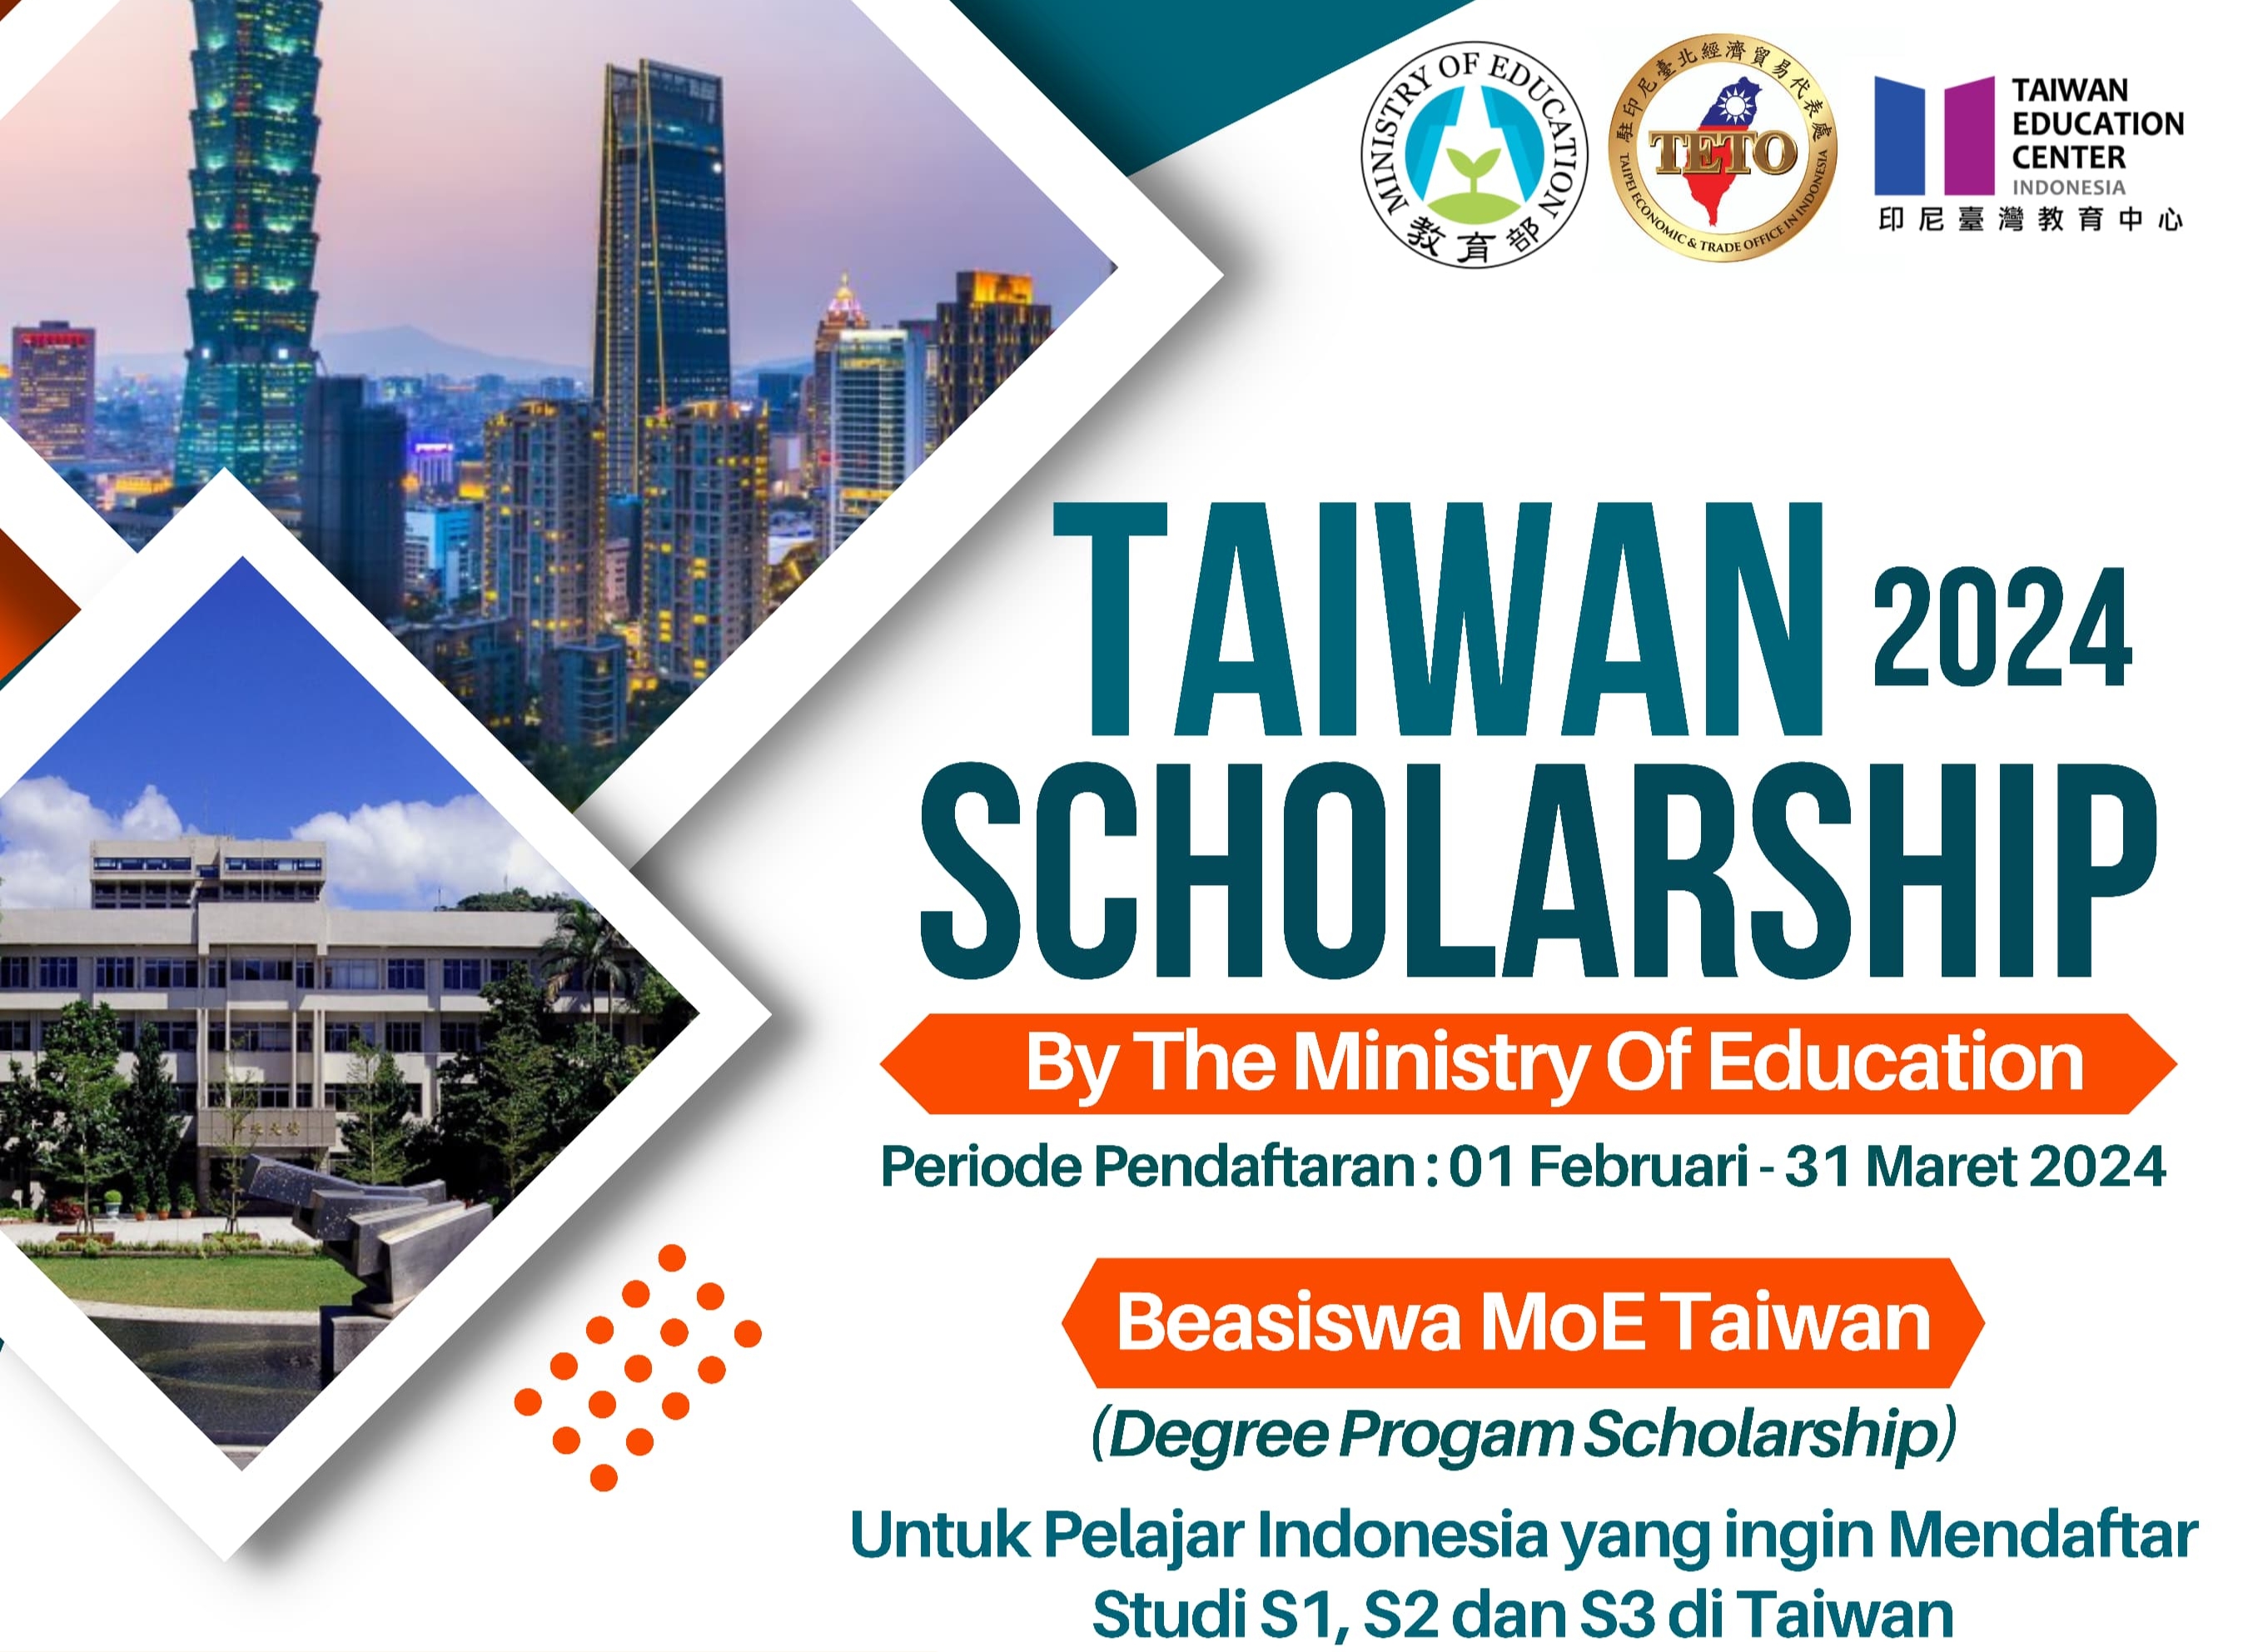 Dapatkan Beasiswa Kuliah Gratis S1 hingga S3 di Taiwan Melalui Program MoE 2024, Berikut Cara Daftarnya!